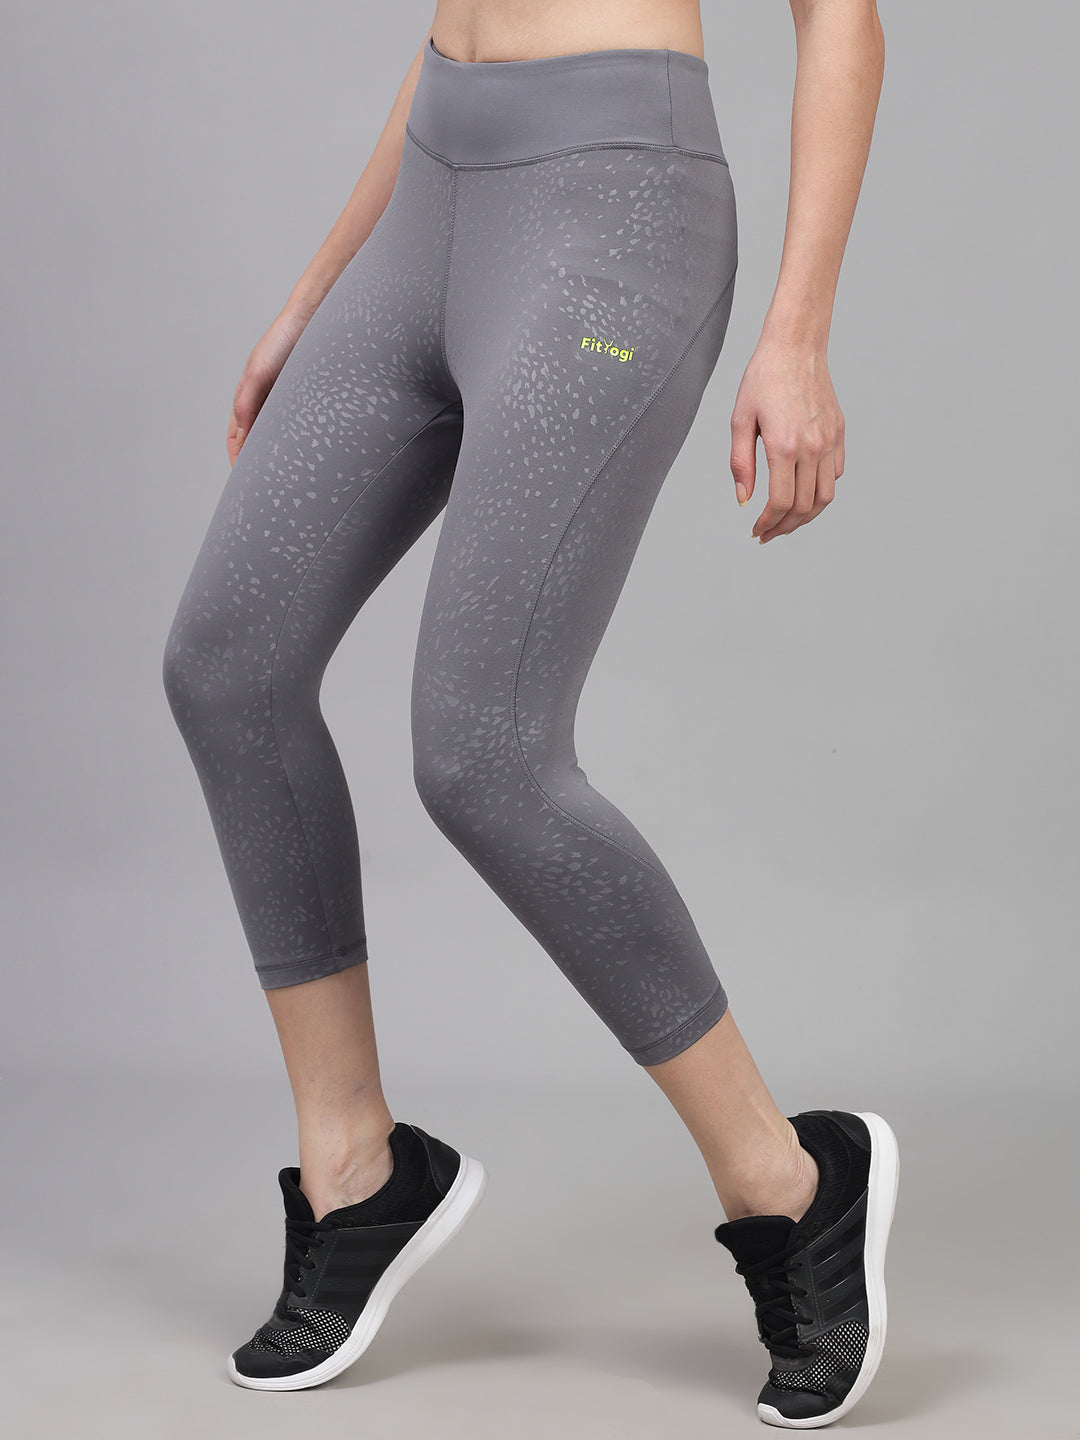 Z by Zella Capri Leggings Size XS Gray Details Cropped Athletic